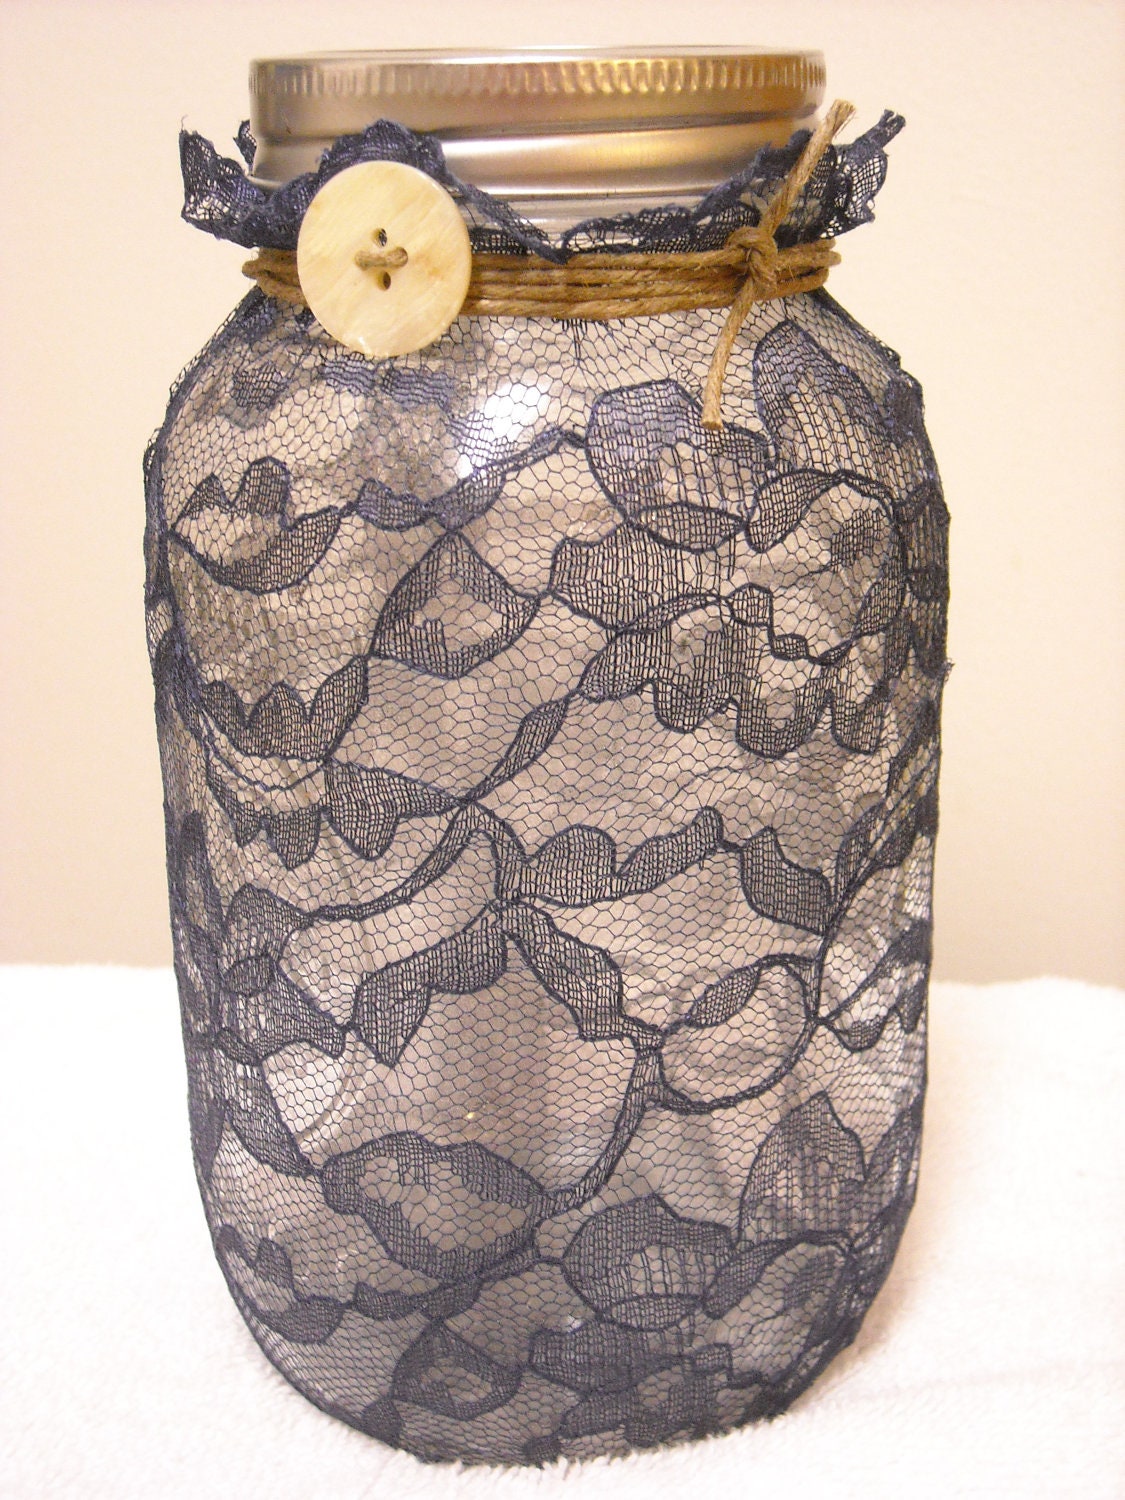 Wedding Decorations - Navy Blue Mason Jar Centerpieces - Candleholder or Vase